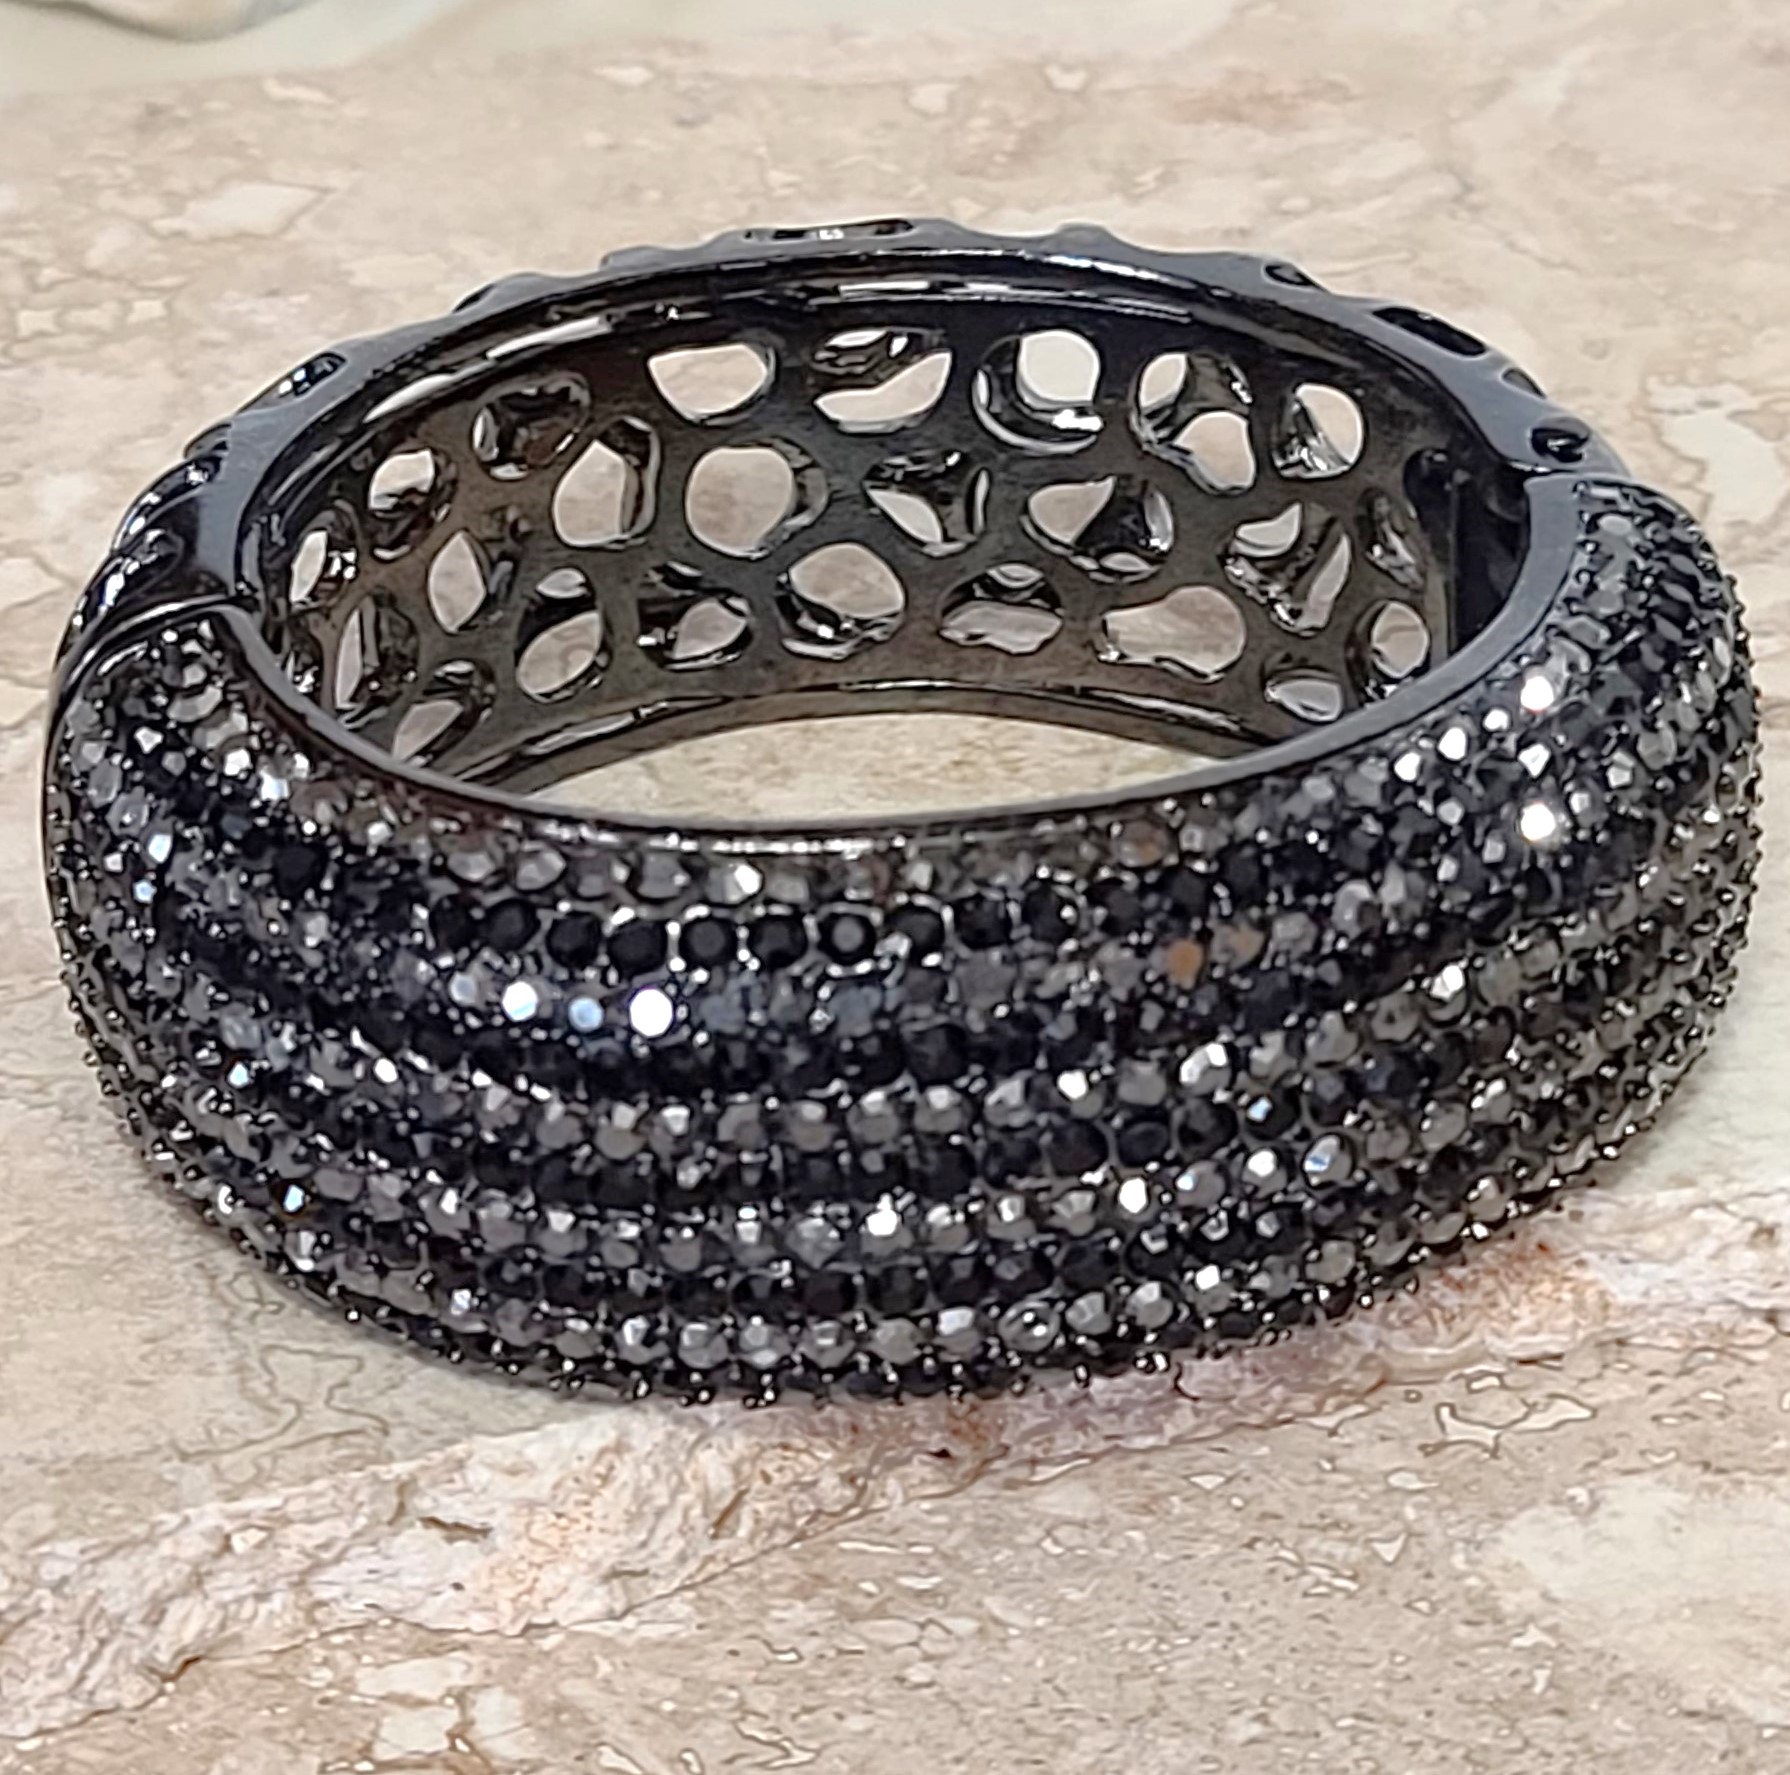 Rhinestone bracelet, large statement bracelet, oval bangle bracelet in two tone rhinestone